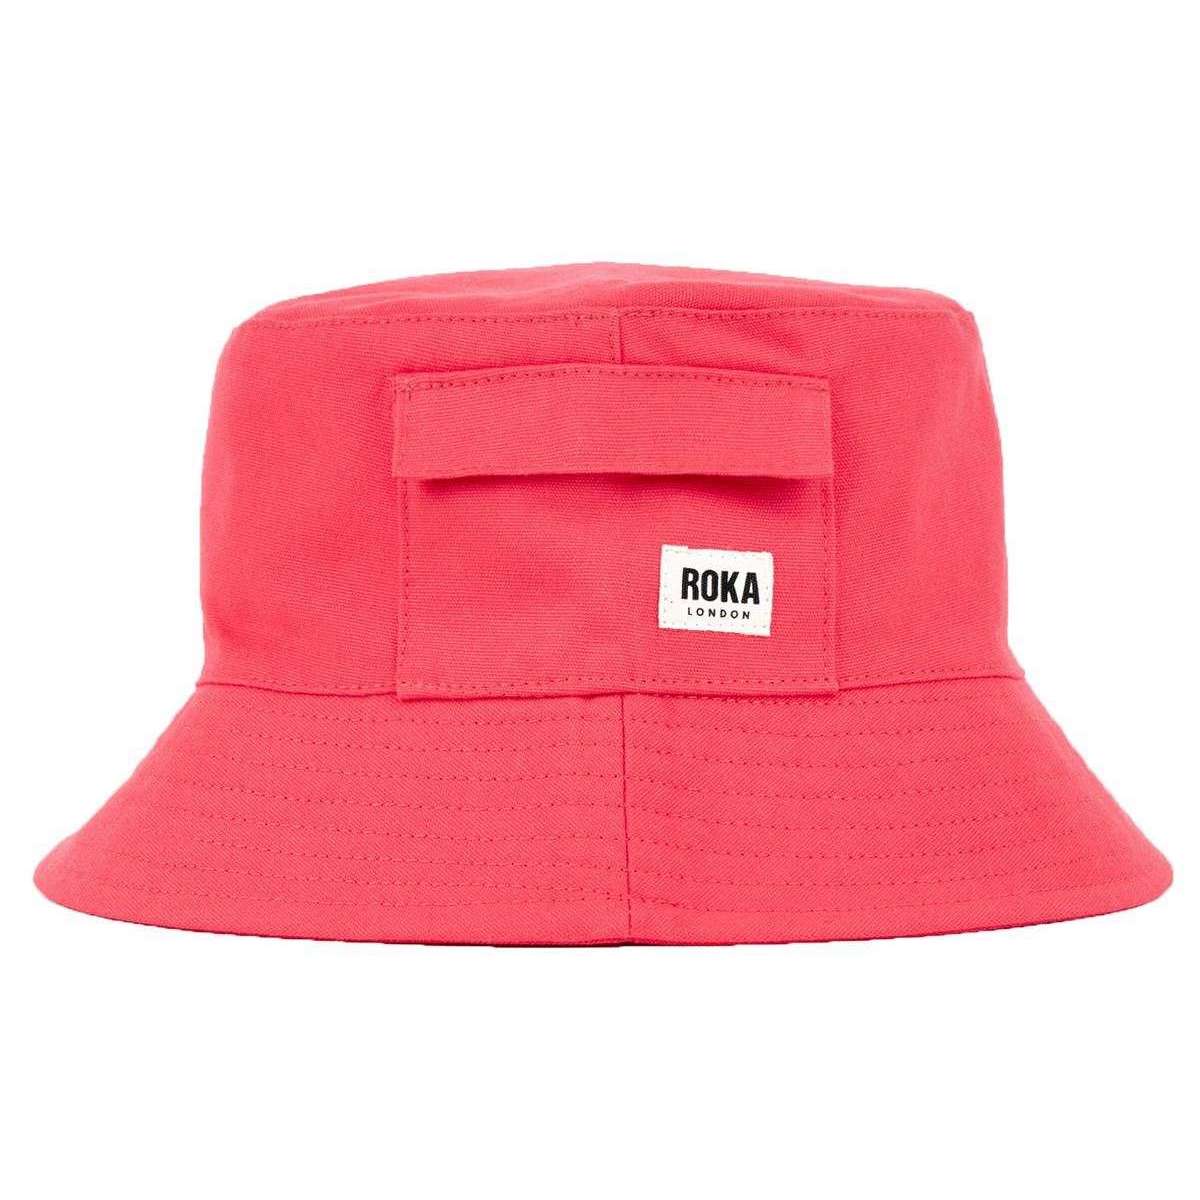 Roka Hatfield Bucket Hat - Coral Pink